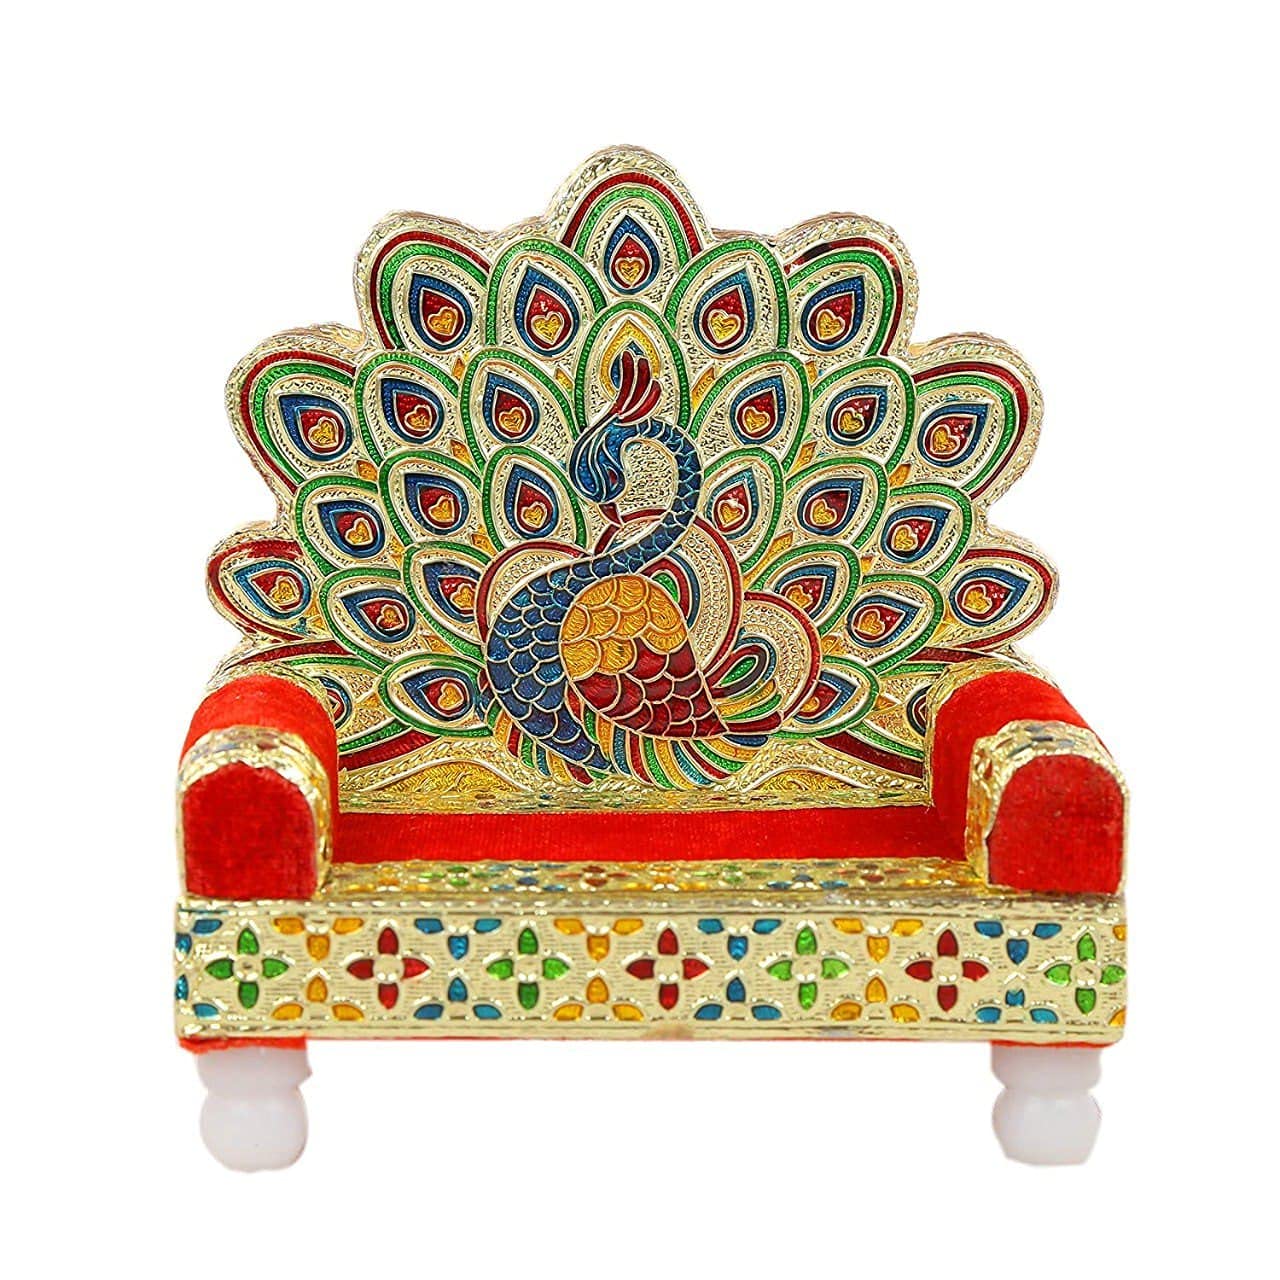 Handicraft Wooden Laddu Gopal Meenakari Singhasan Peacock Shape Laddu Gopal Singhasan for Pooja, God Idols, Pooja Chowki, Home Temple